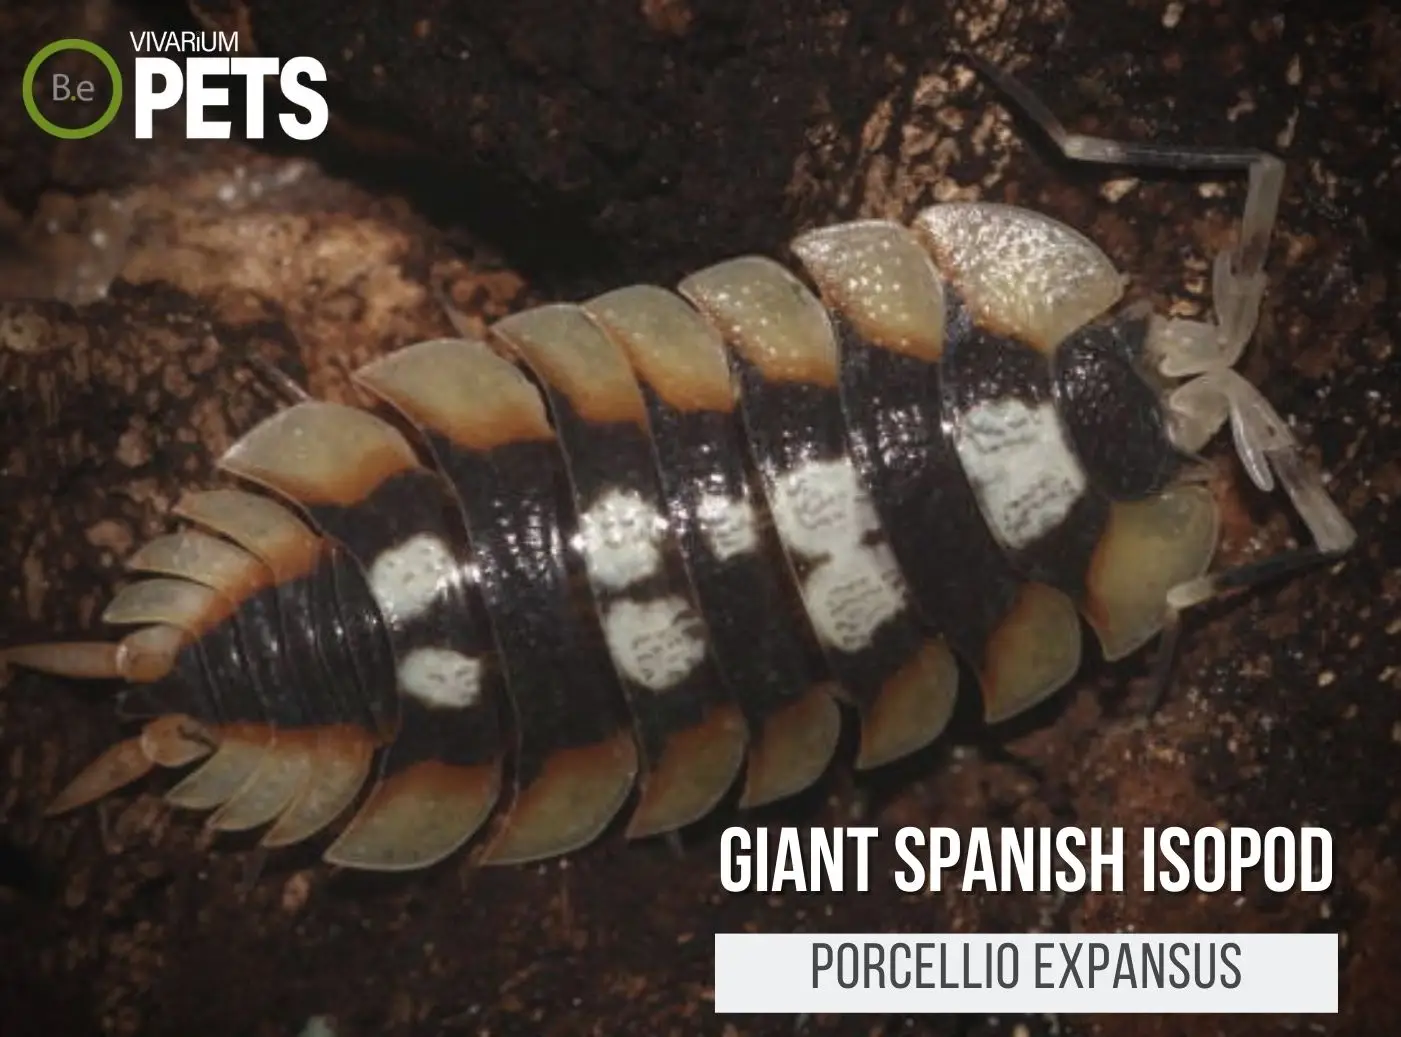 Porcellio expansus "Giant Spanish Isopod" Full Care Guide!